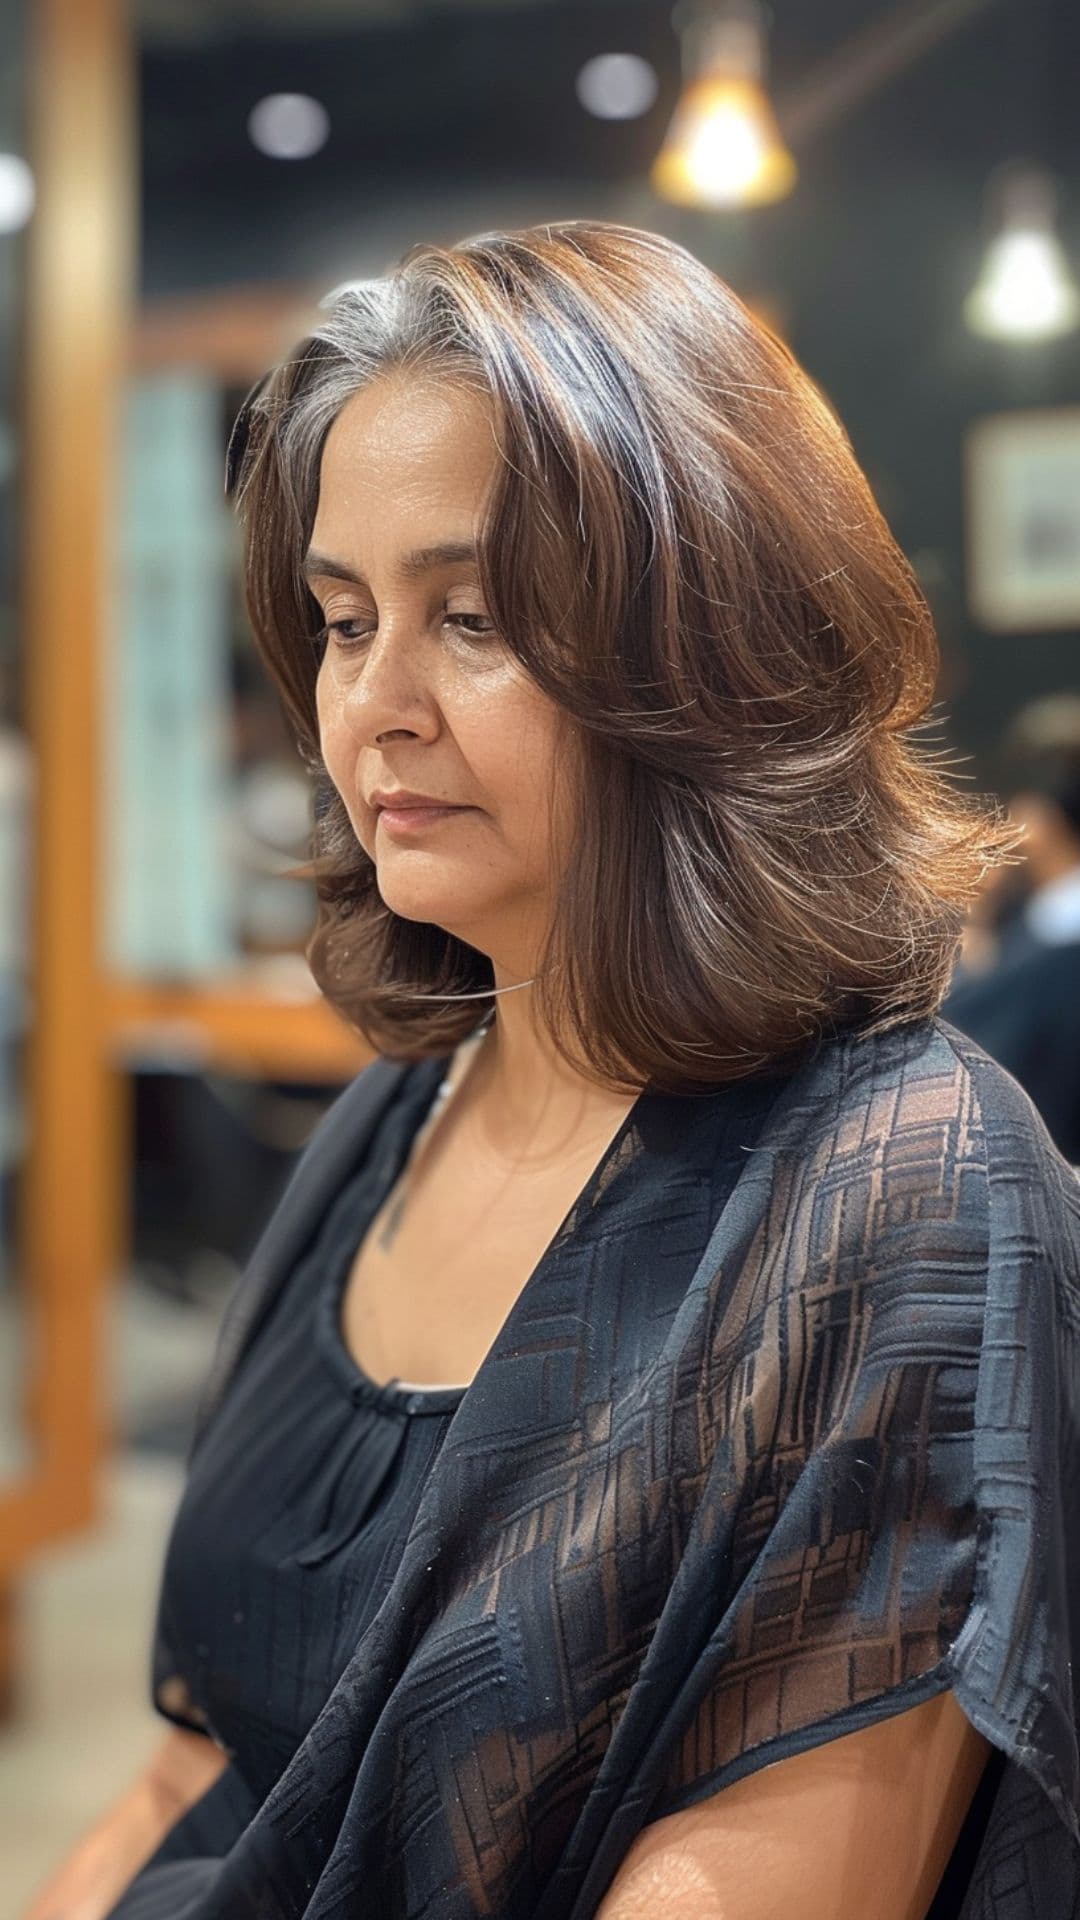 An older woman modelling a long layered bob haircut.